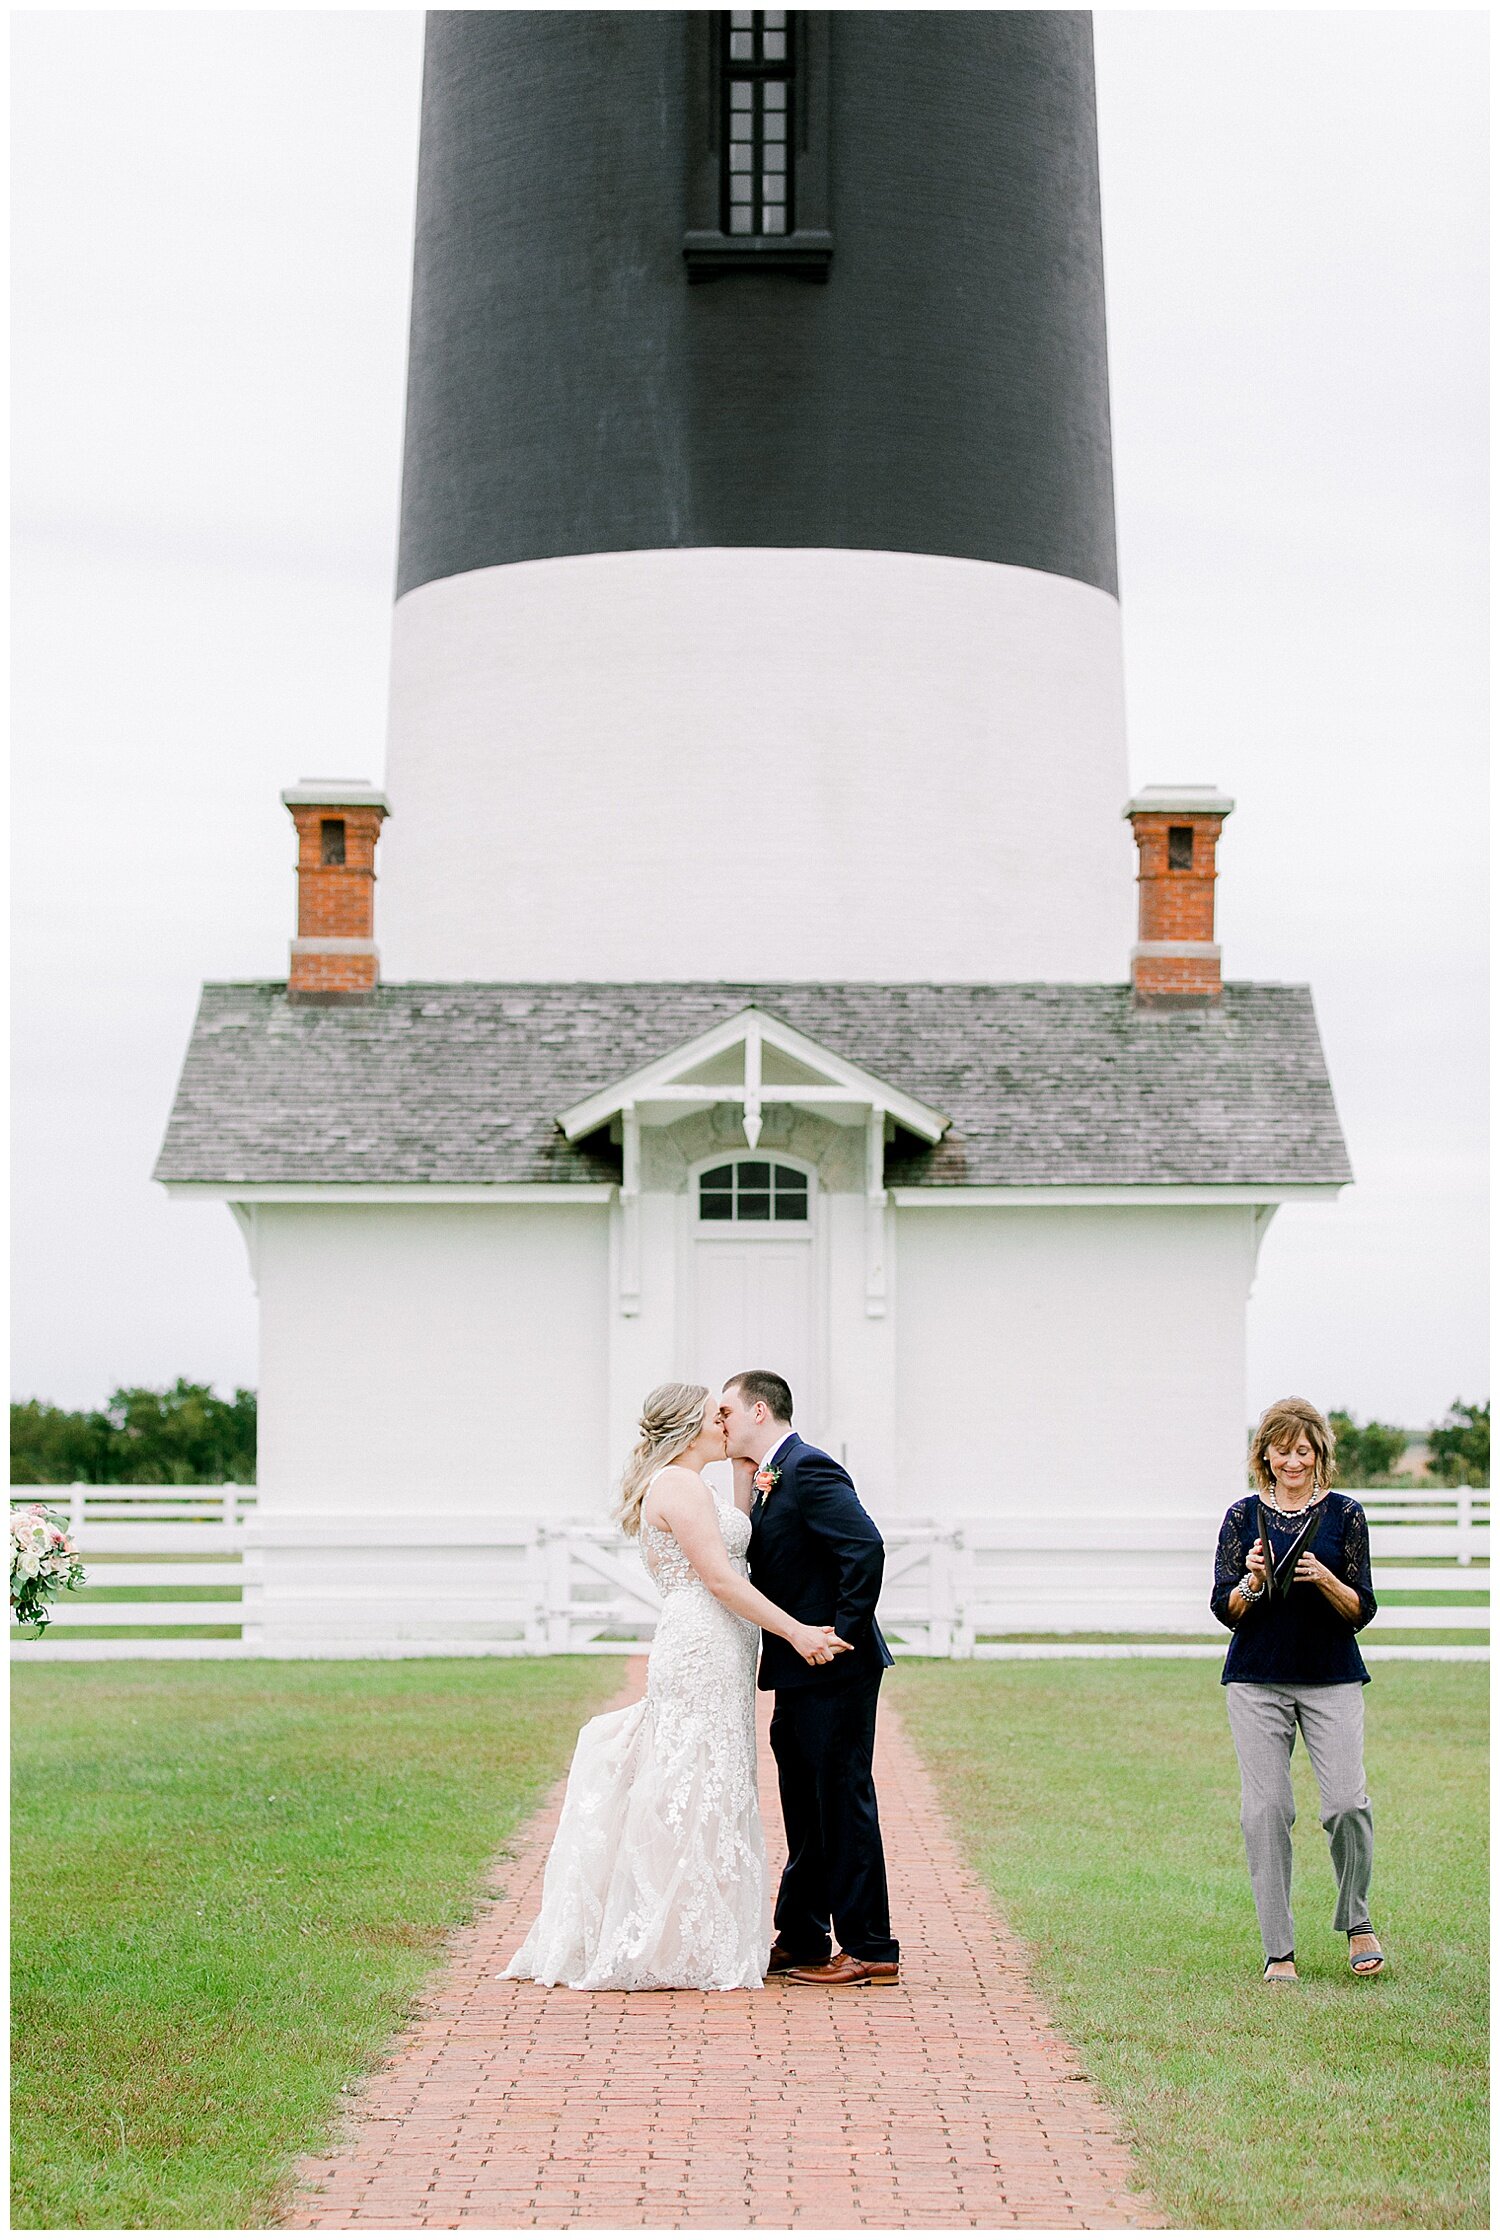 Bodie Island Lighthouse Elopement Richmond VA Wedding Photographer_0030.jpg